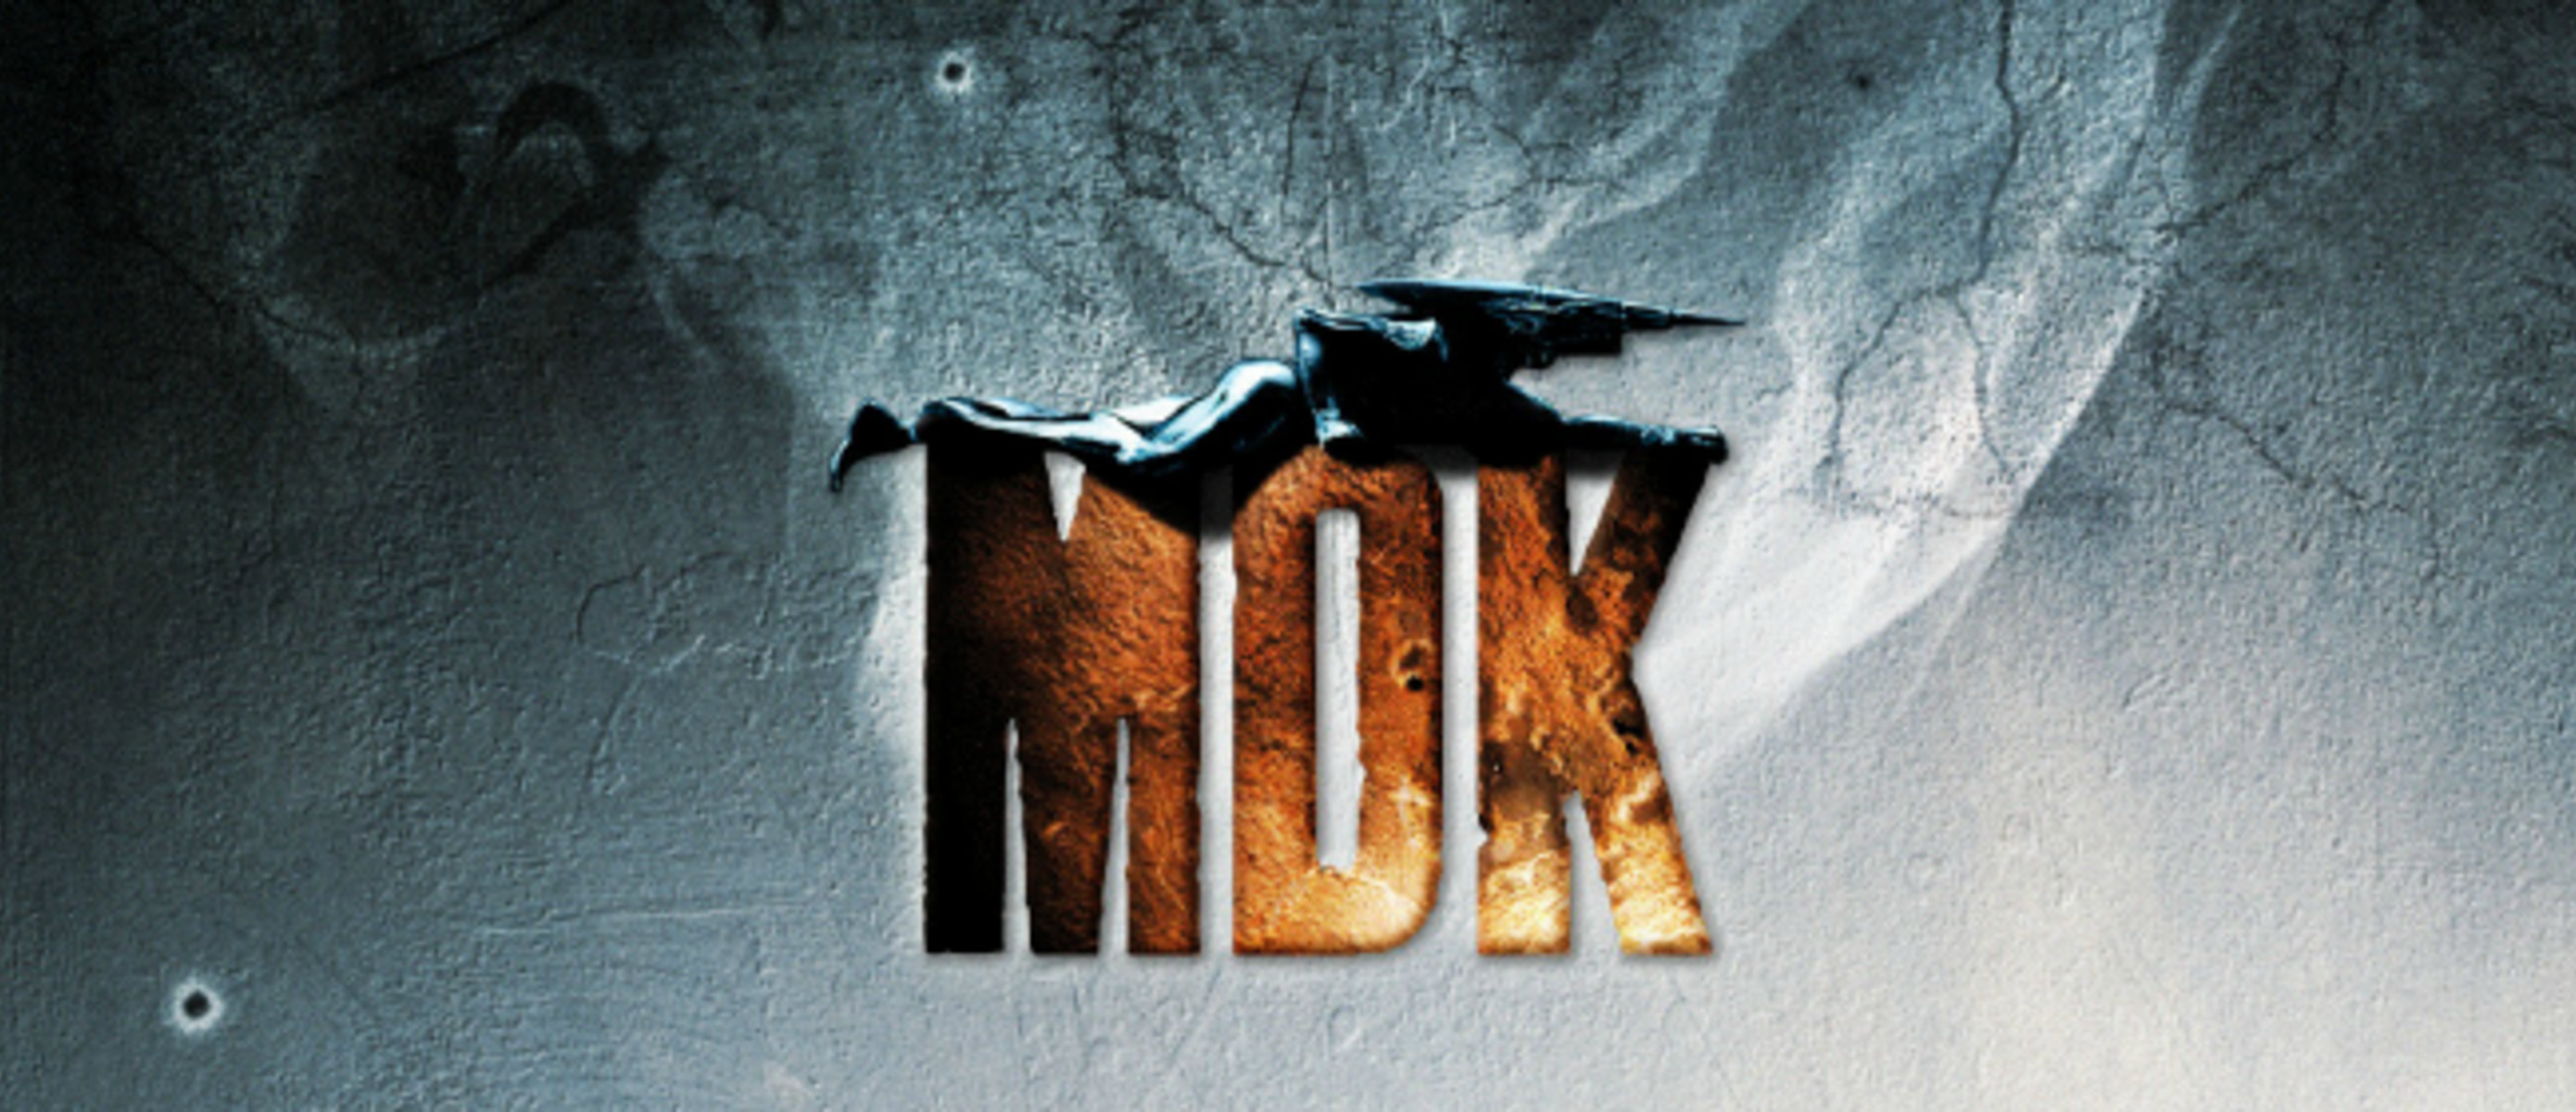 4 2 3 2 мдк. МДК. MDK shiny Entertainment. MDK игра. MDK 3.